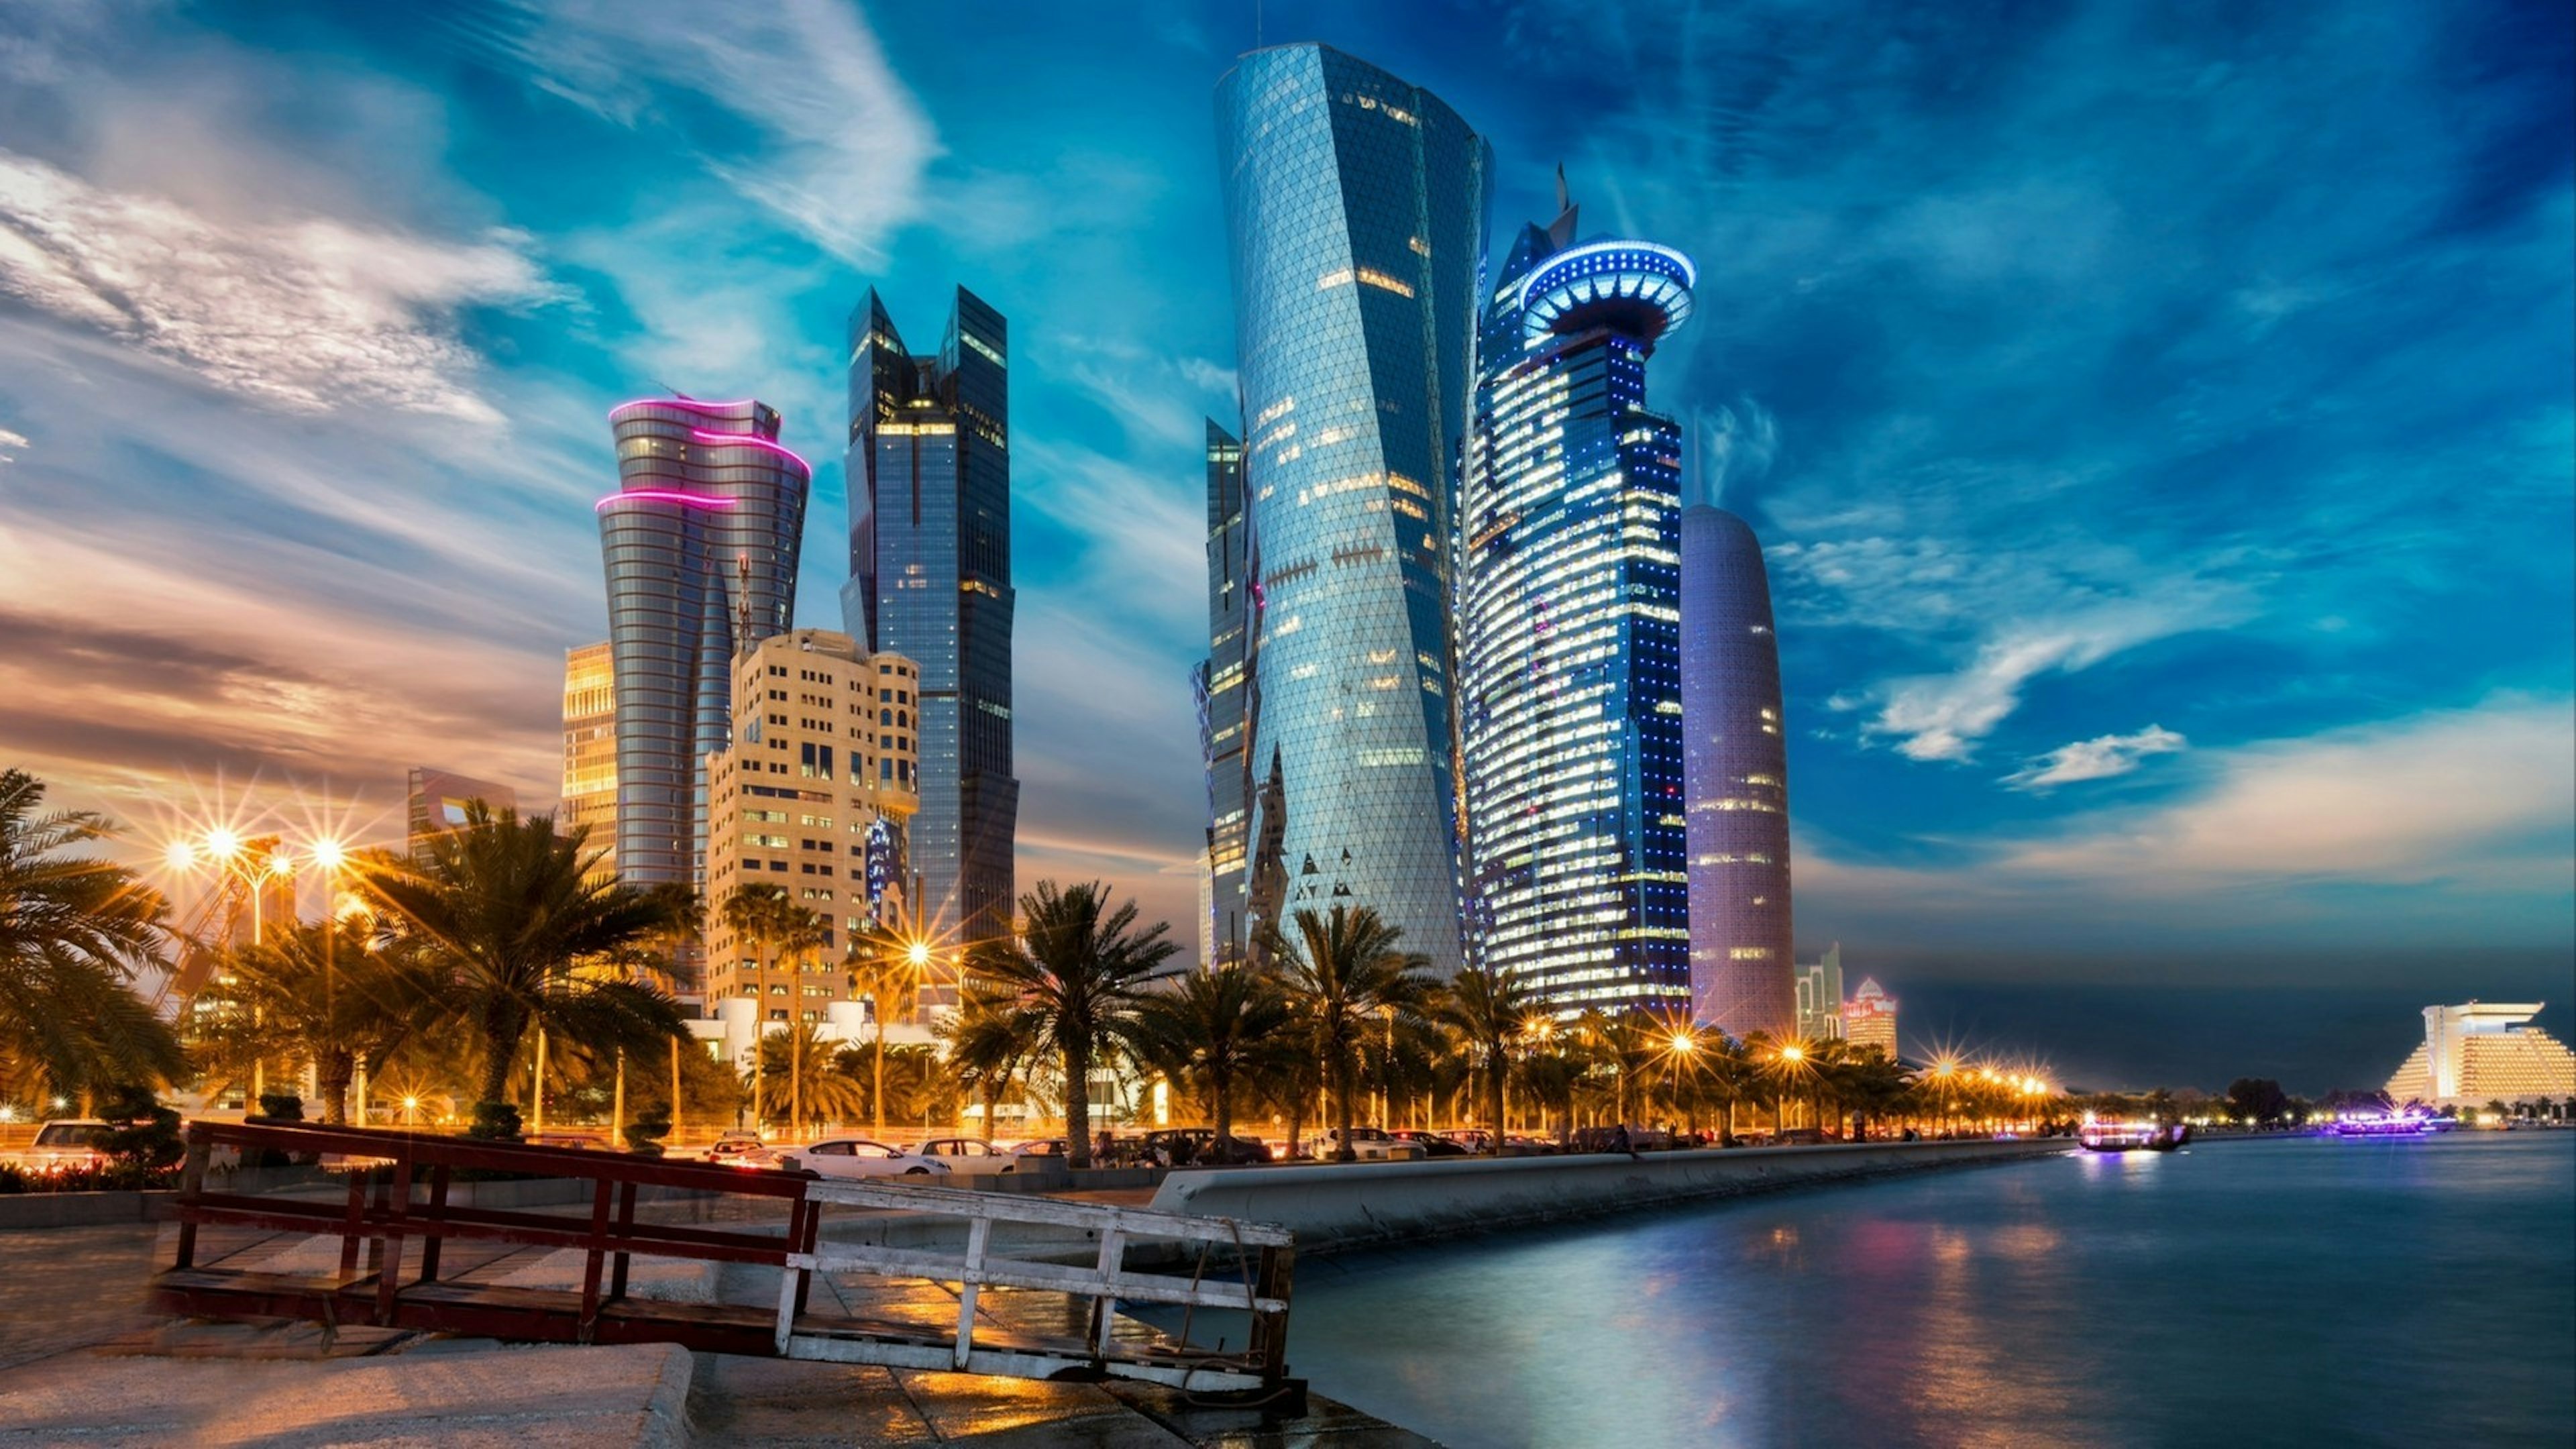 The skyline of Doha city center after sunset, Qatar